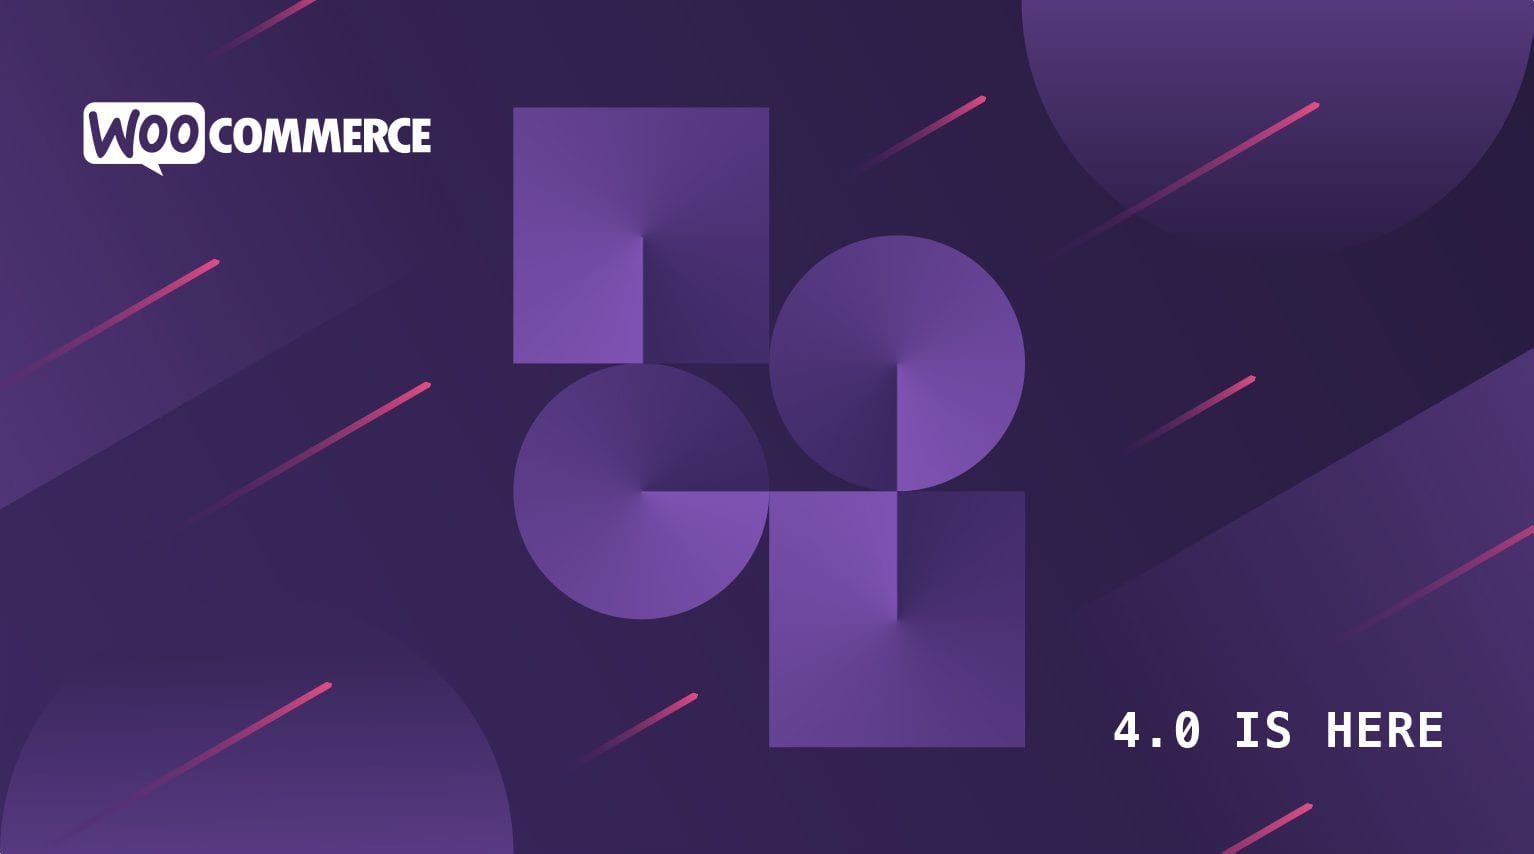 Woocommerce 4.0 presentation with purple background